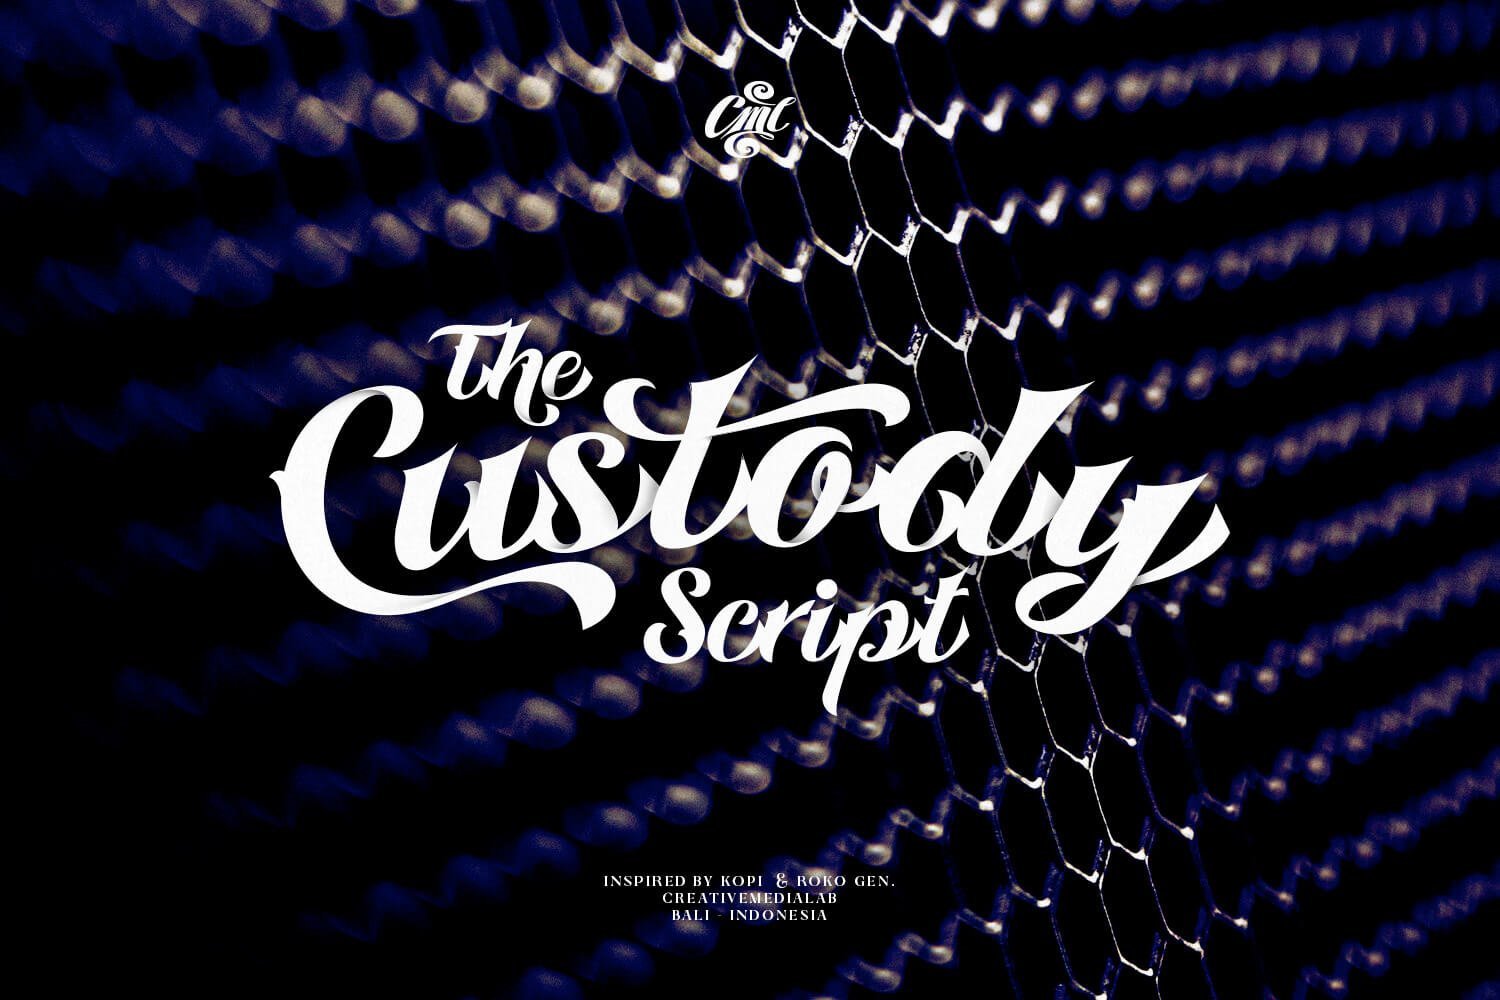 Custody Script cover image.